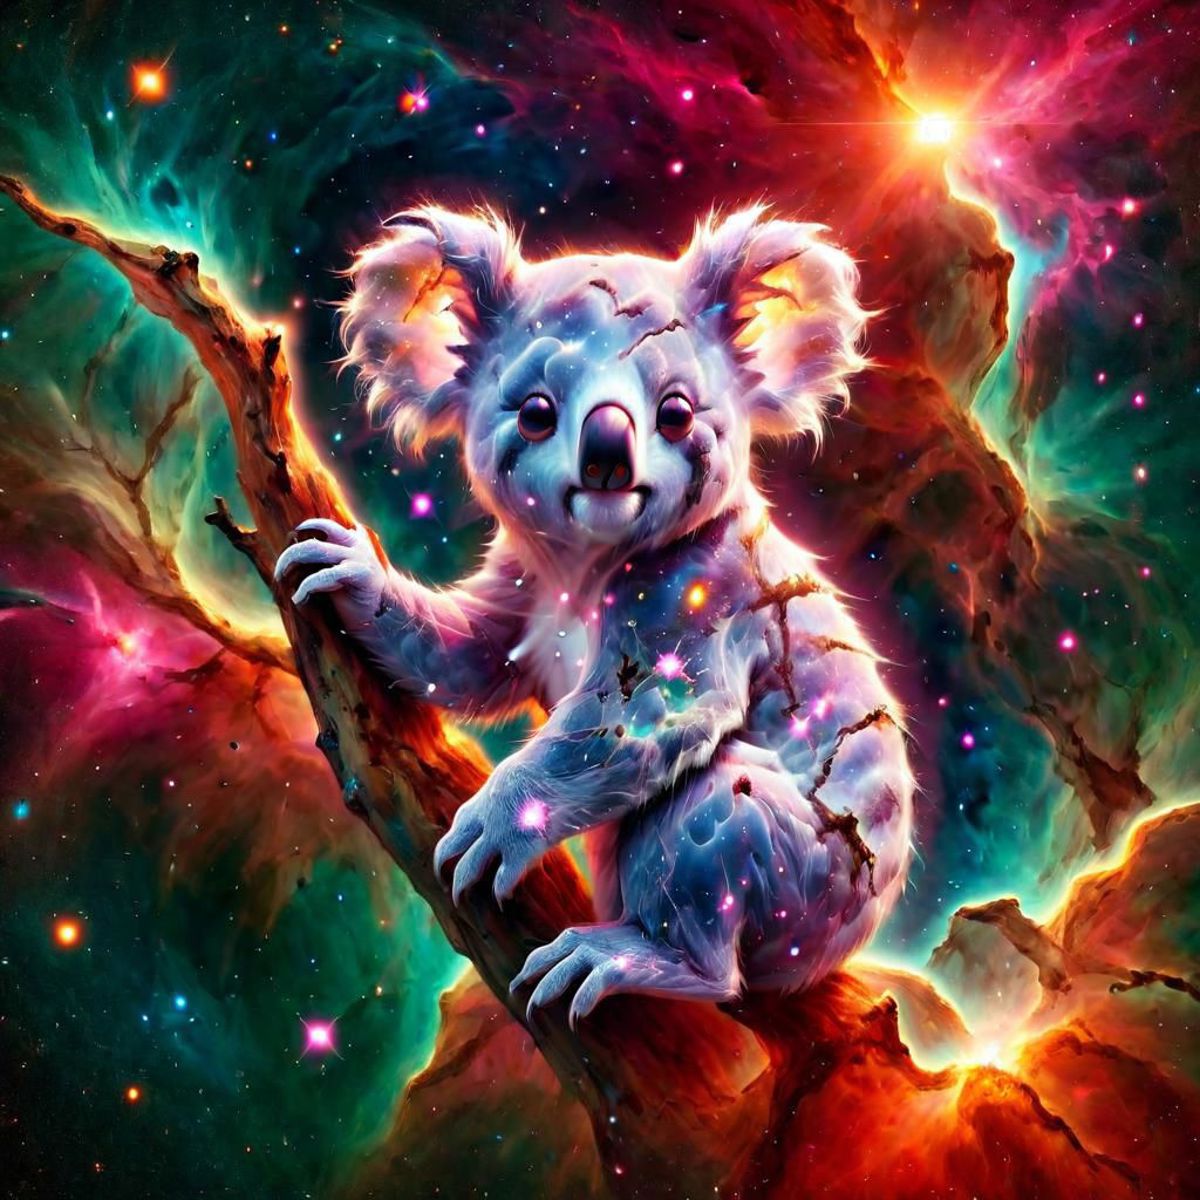 Cosmic Nebula Style SDXL + SD1.5 image by tlano